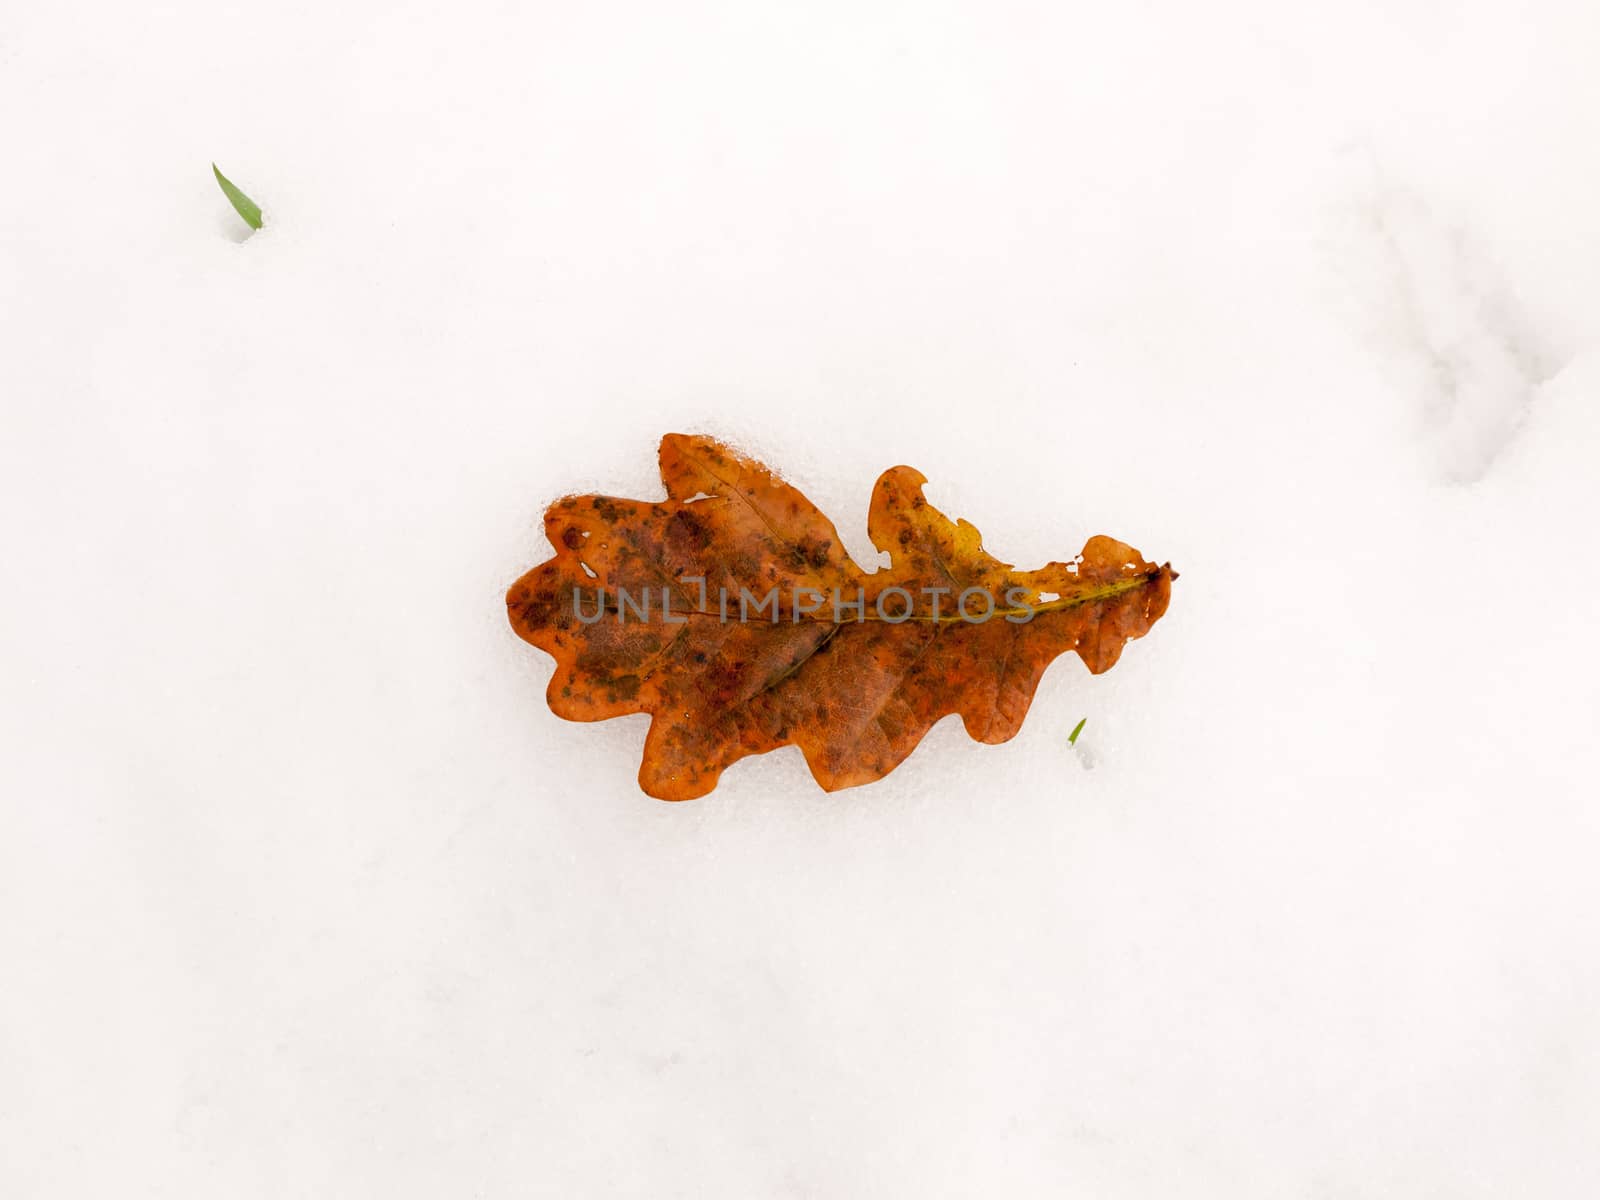 single brown close up fallen oak leaf whole on white snow backgr by callumrc